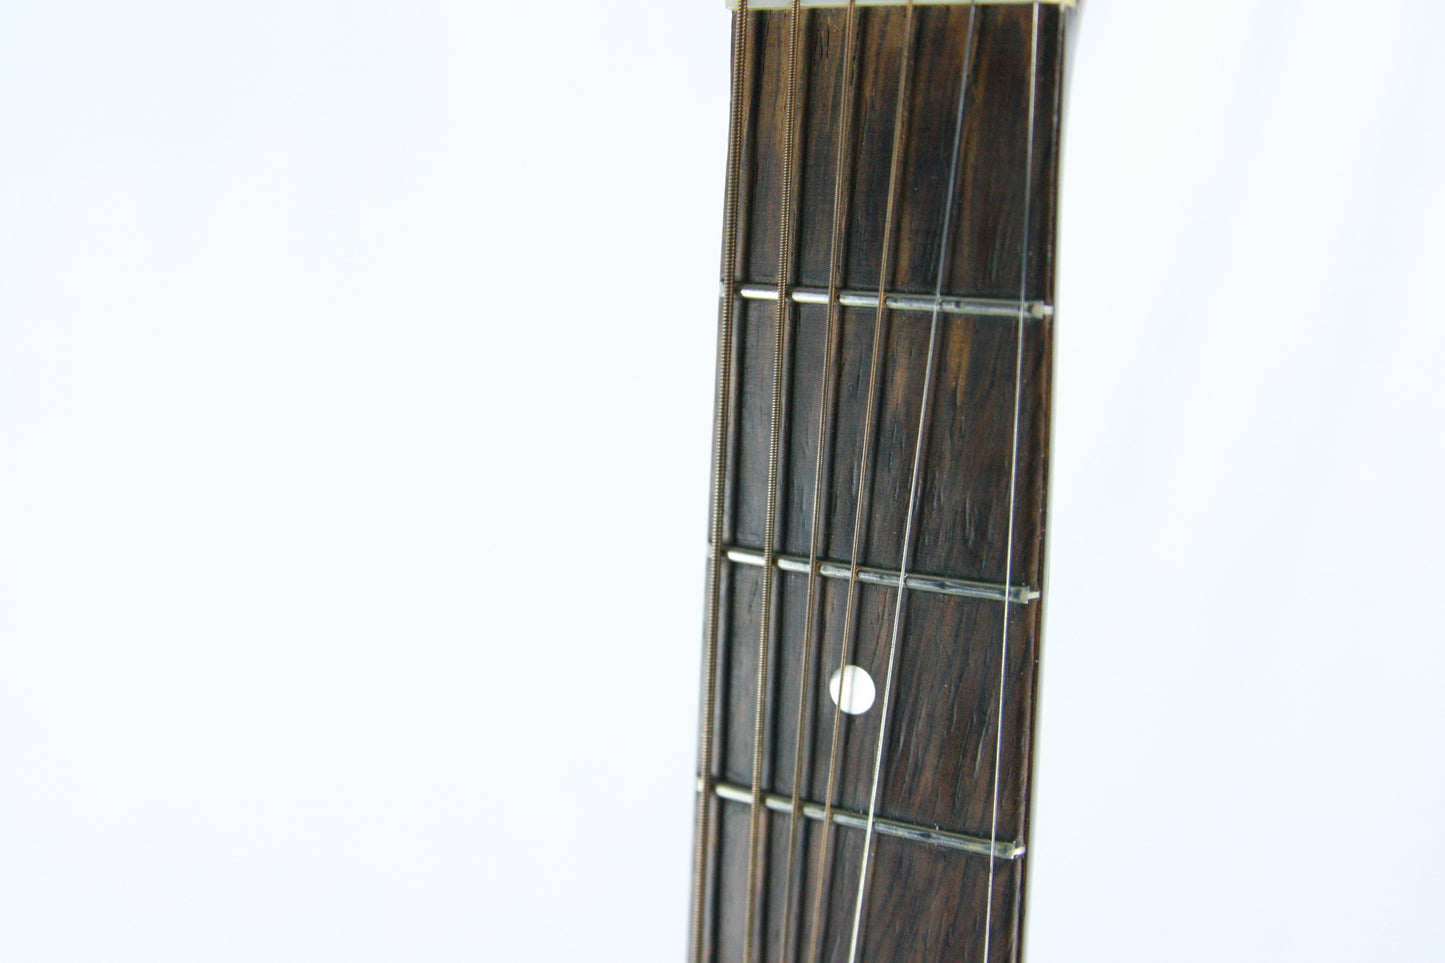 c. 1950 Gibson L-48 Sunburst Mahogany Top Archtop Acoustic Guitar! l50